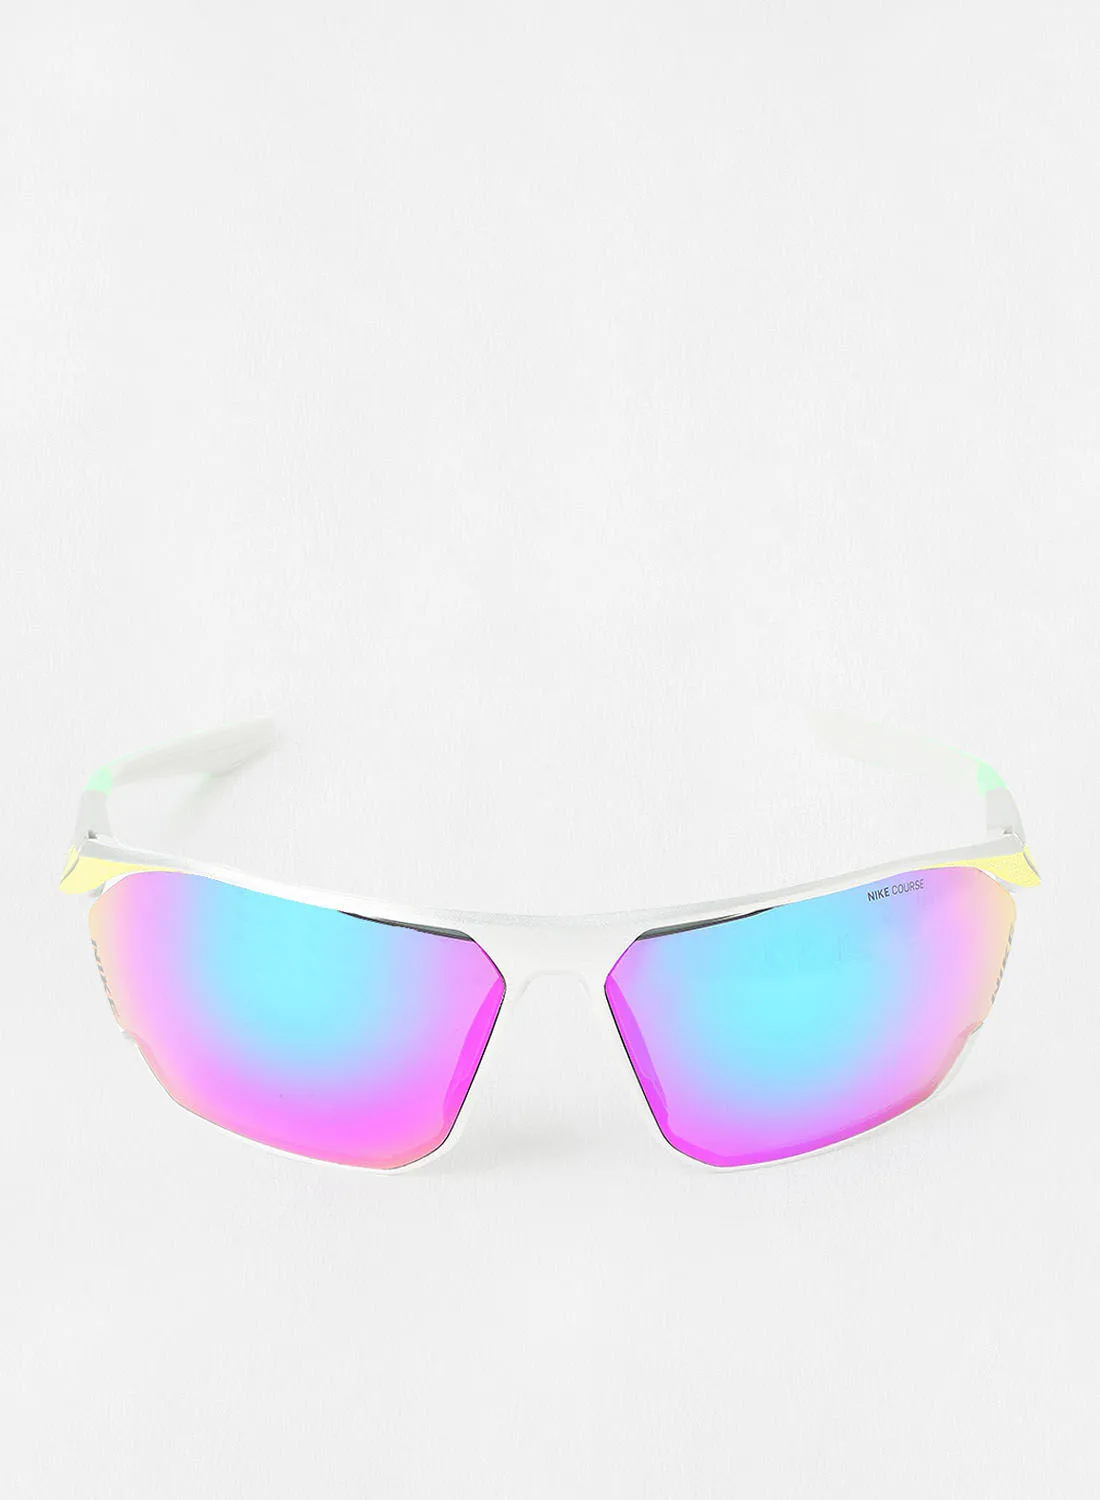 Nike Men's UV Protection Sport Sunglasses